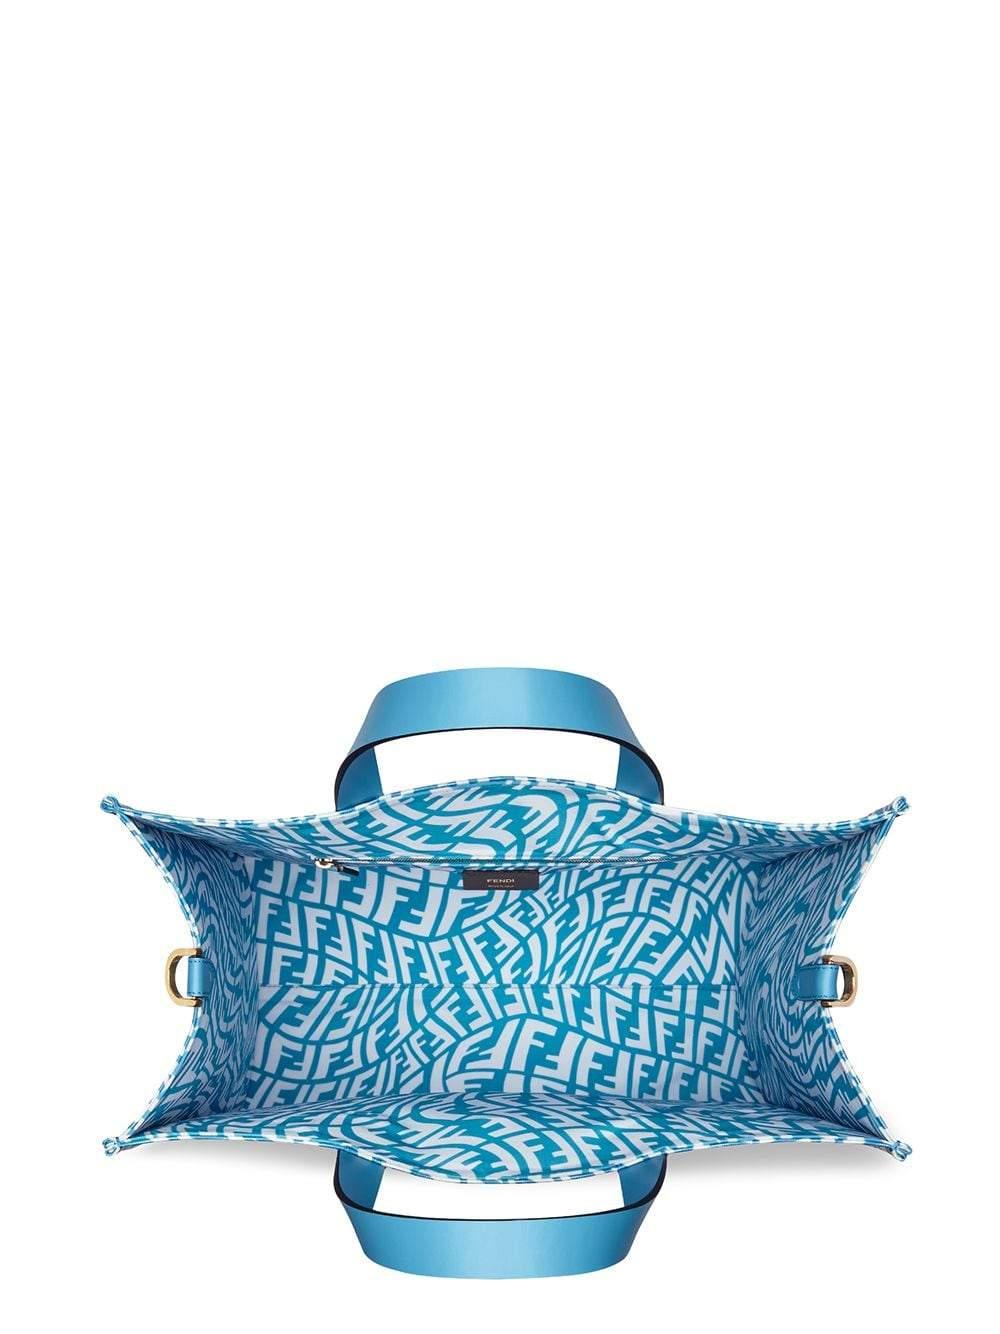 NWT FENDI medium flat pouch in FF vertigo logo canvas blue and